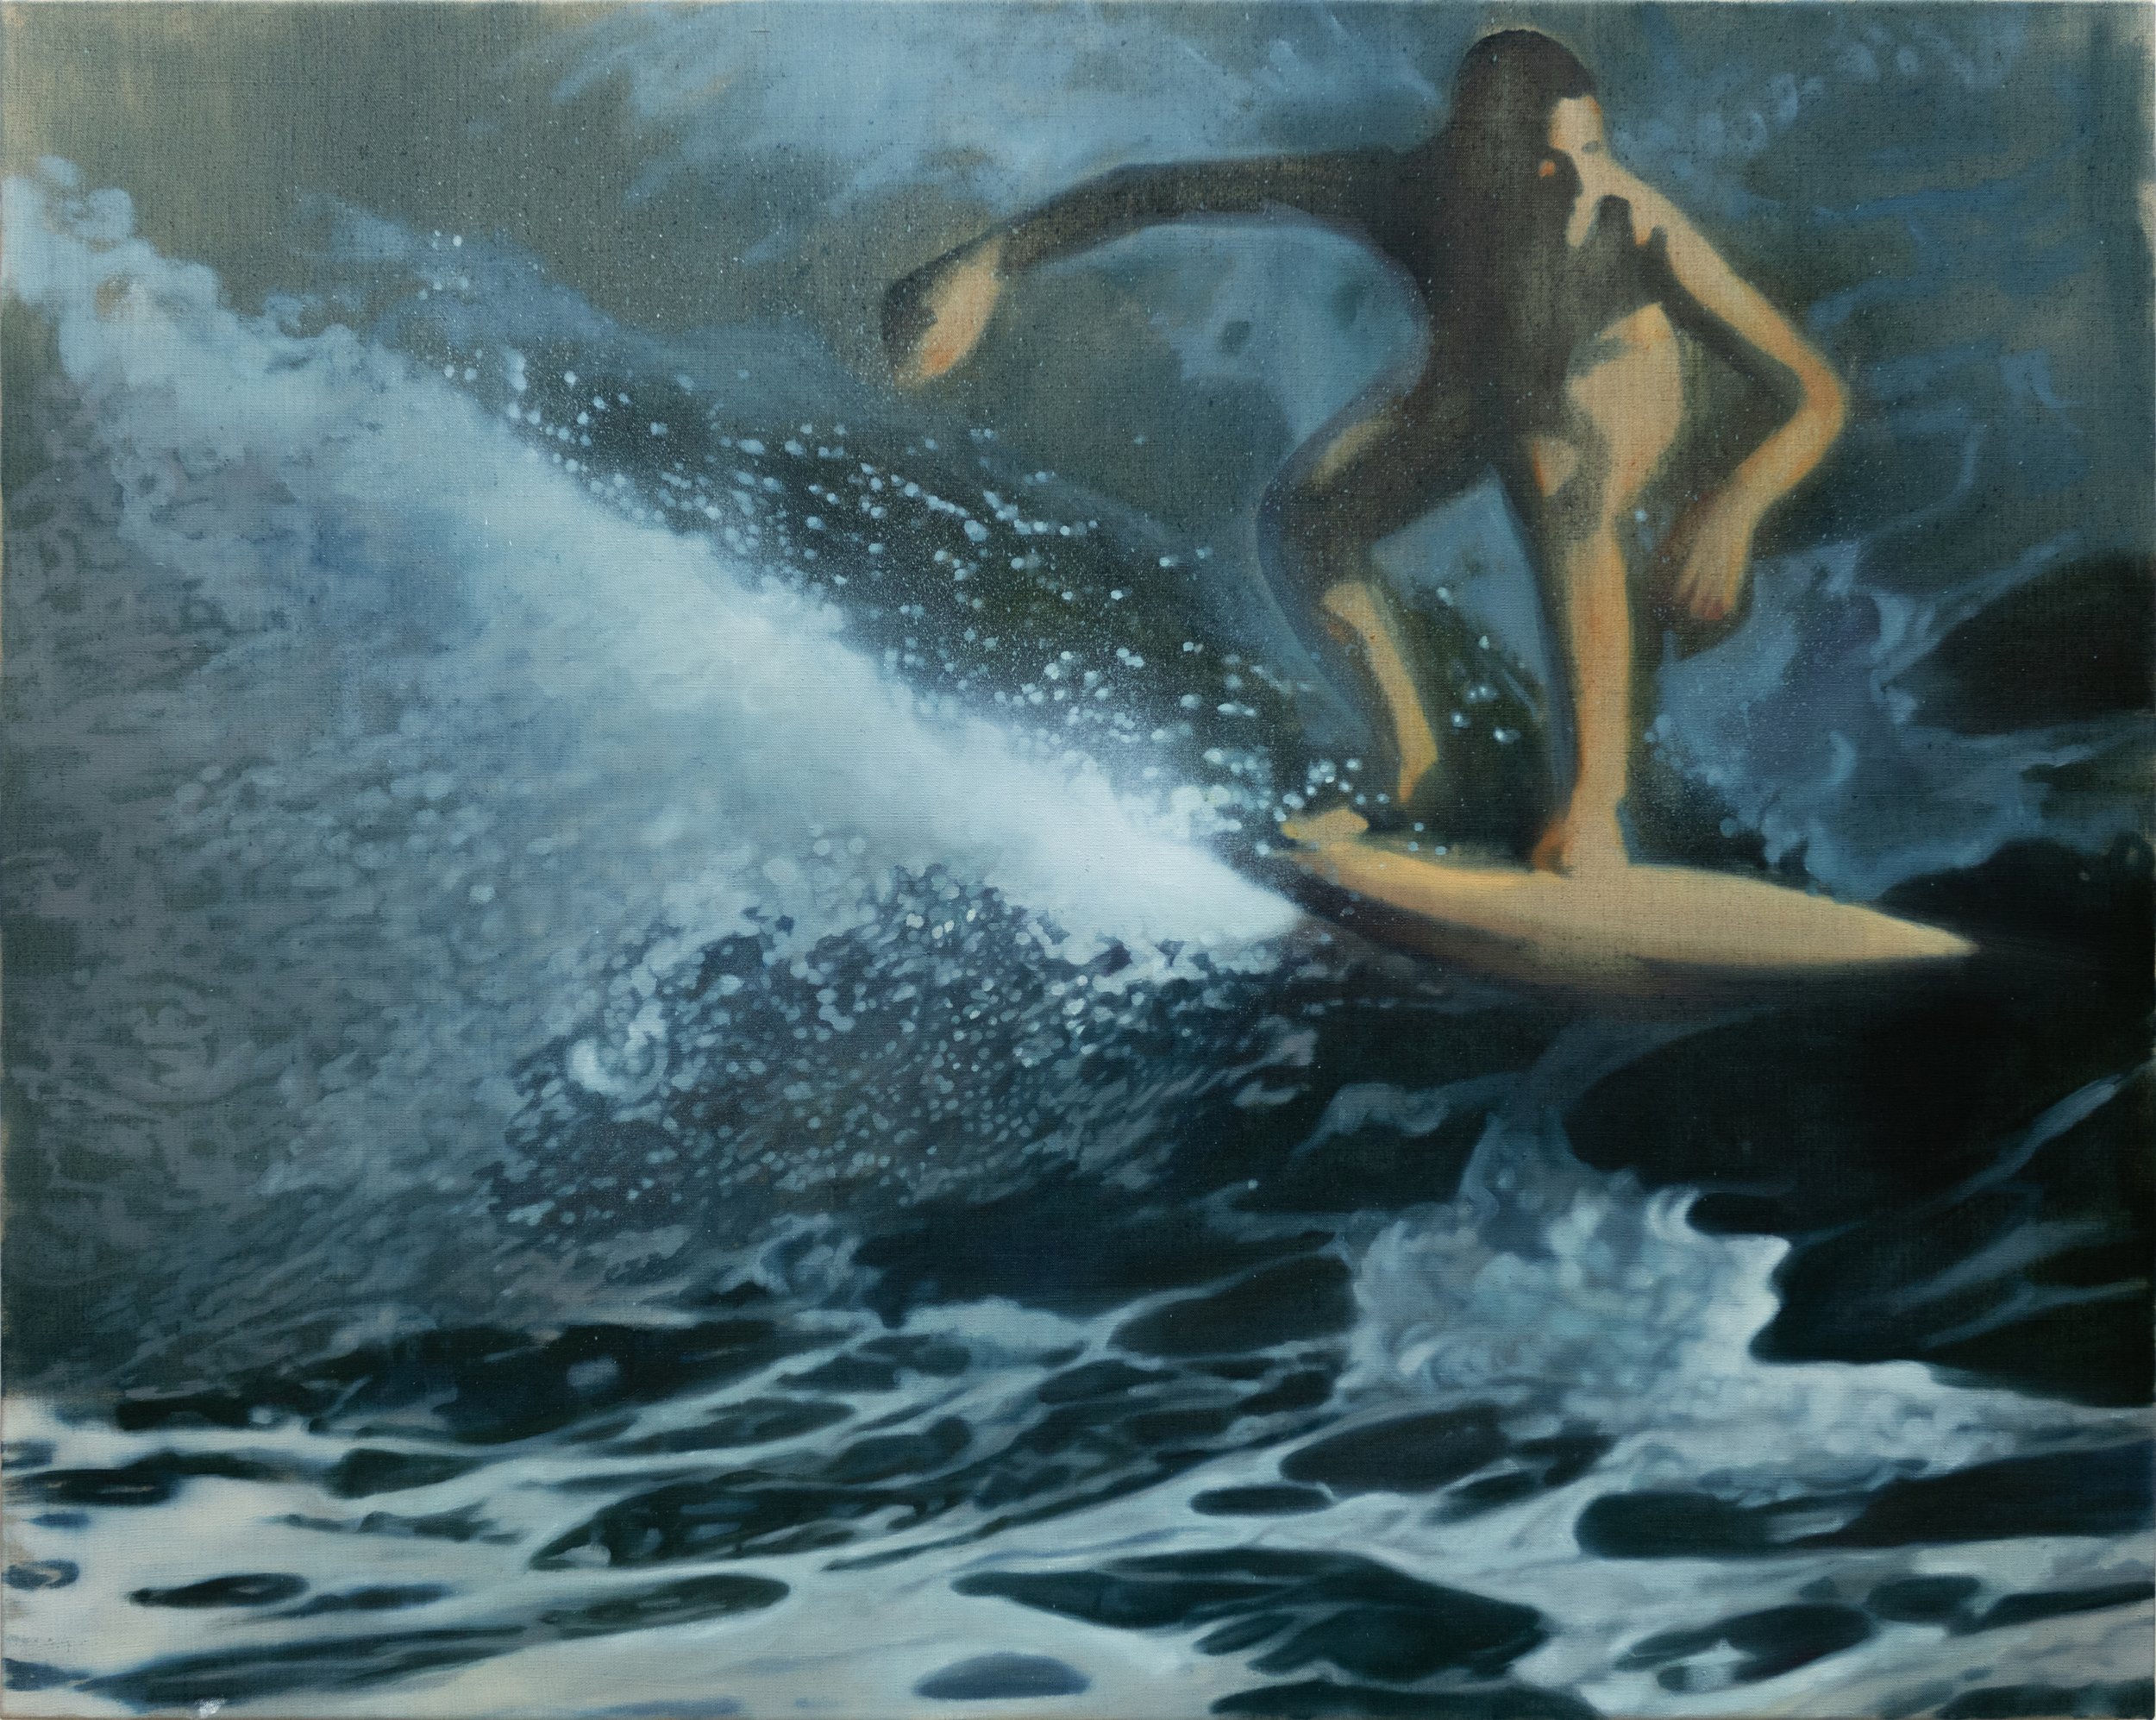 Mythology 1 (What if?). Oil on canvas. 100 x 126 cm. 2023